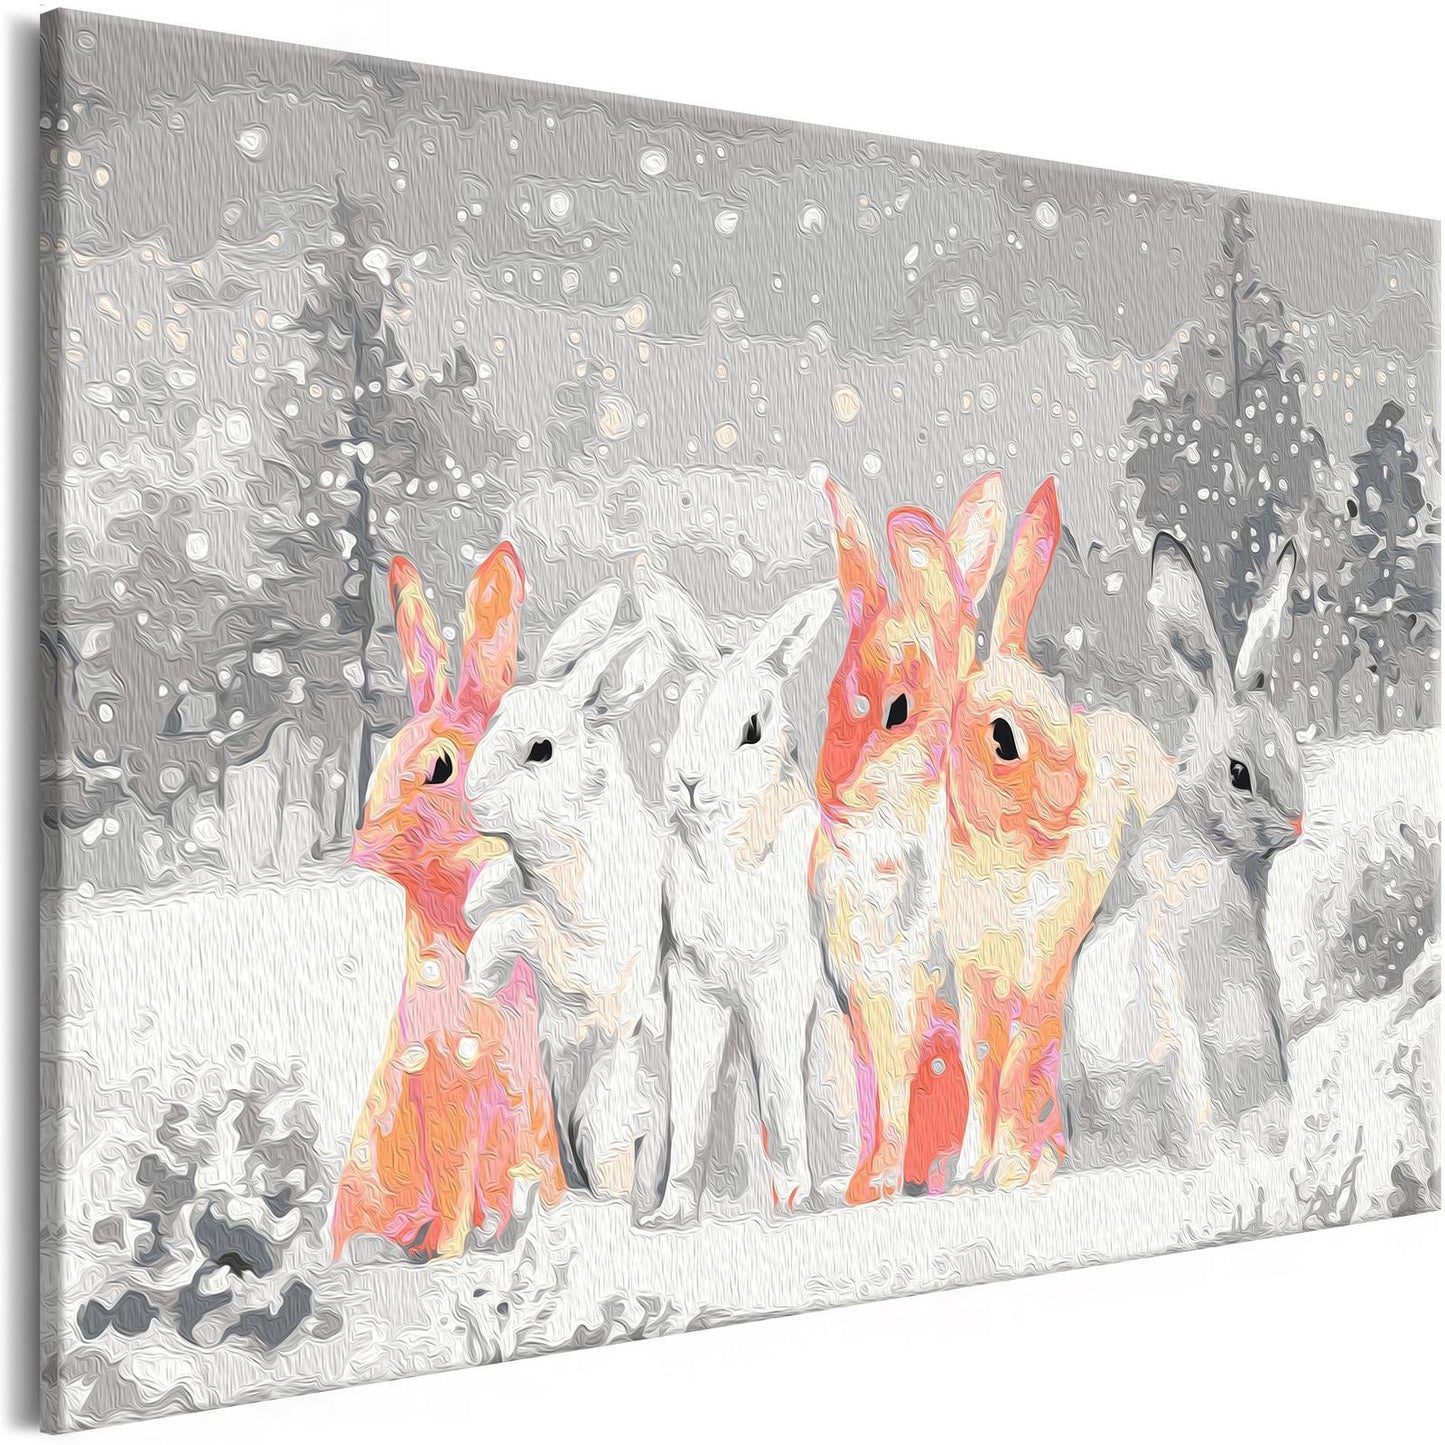 DIY canvas painting - Winter Bunnies 